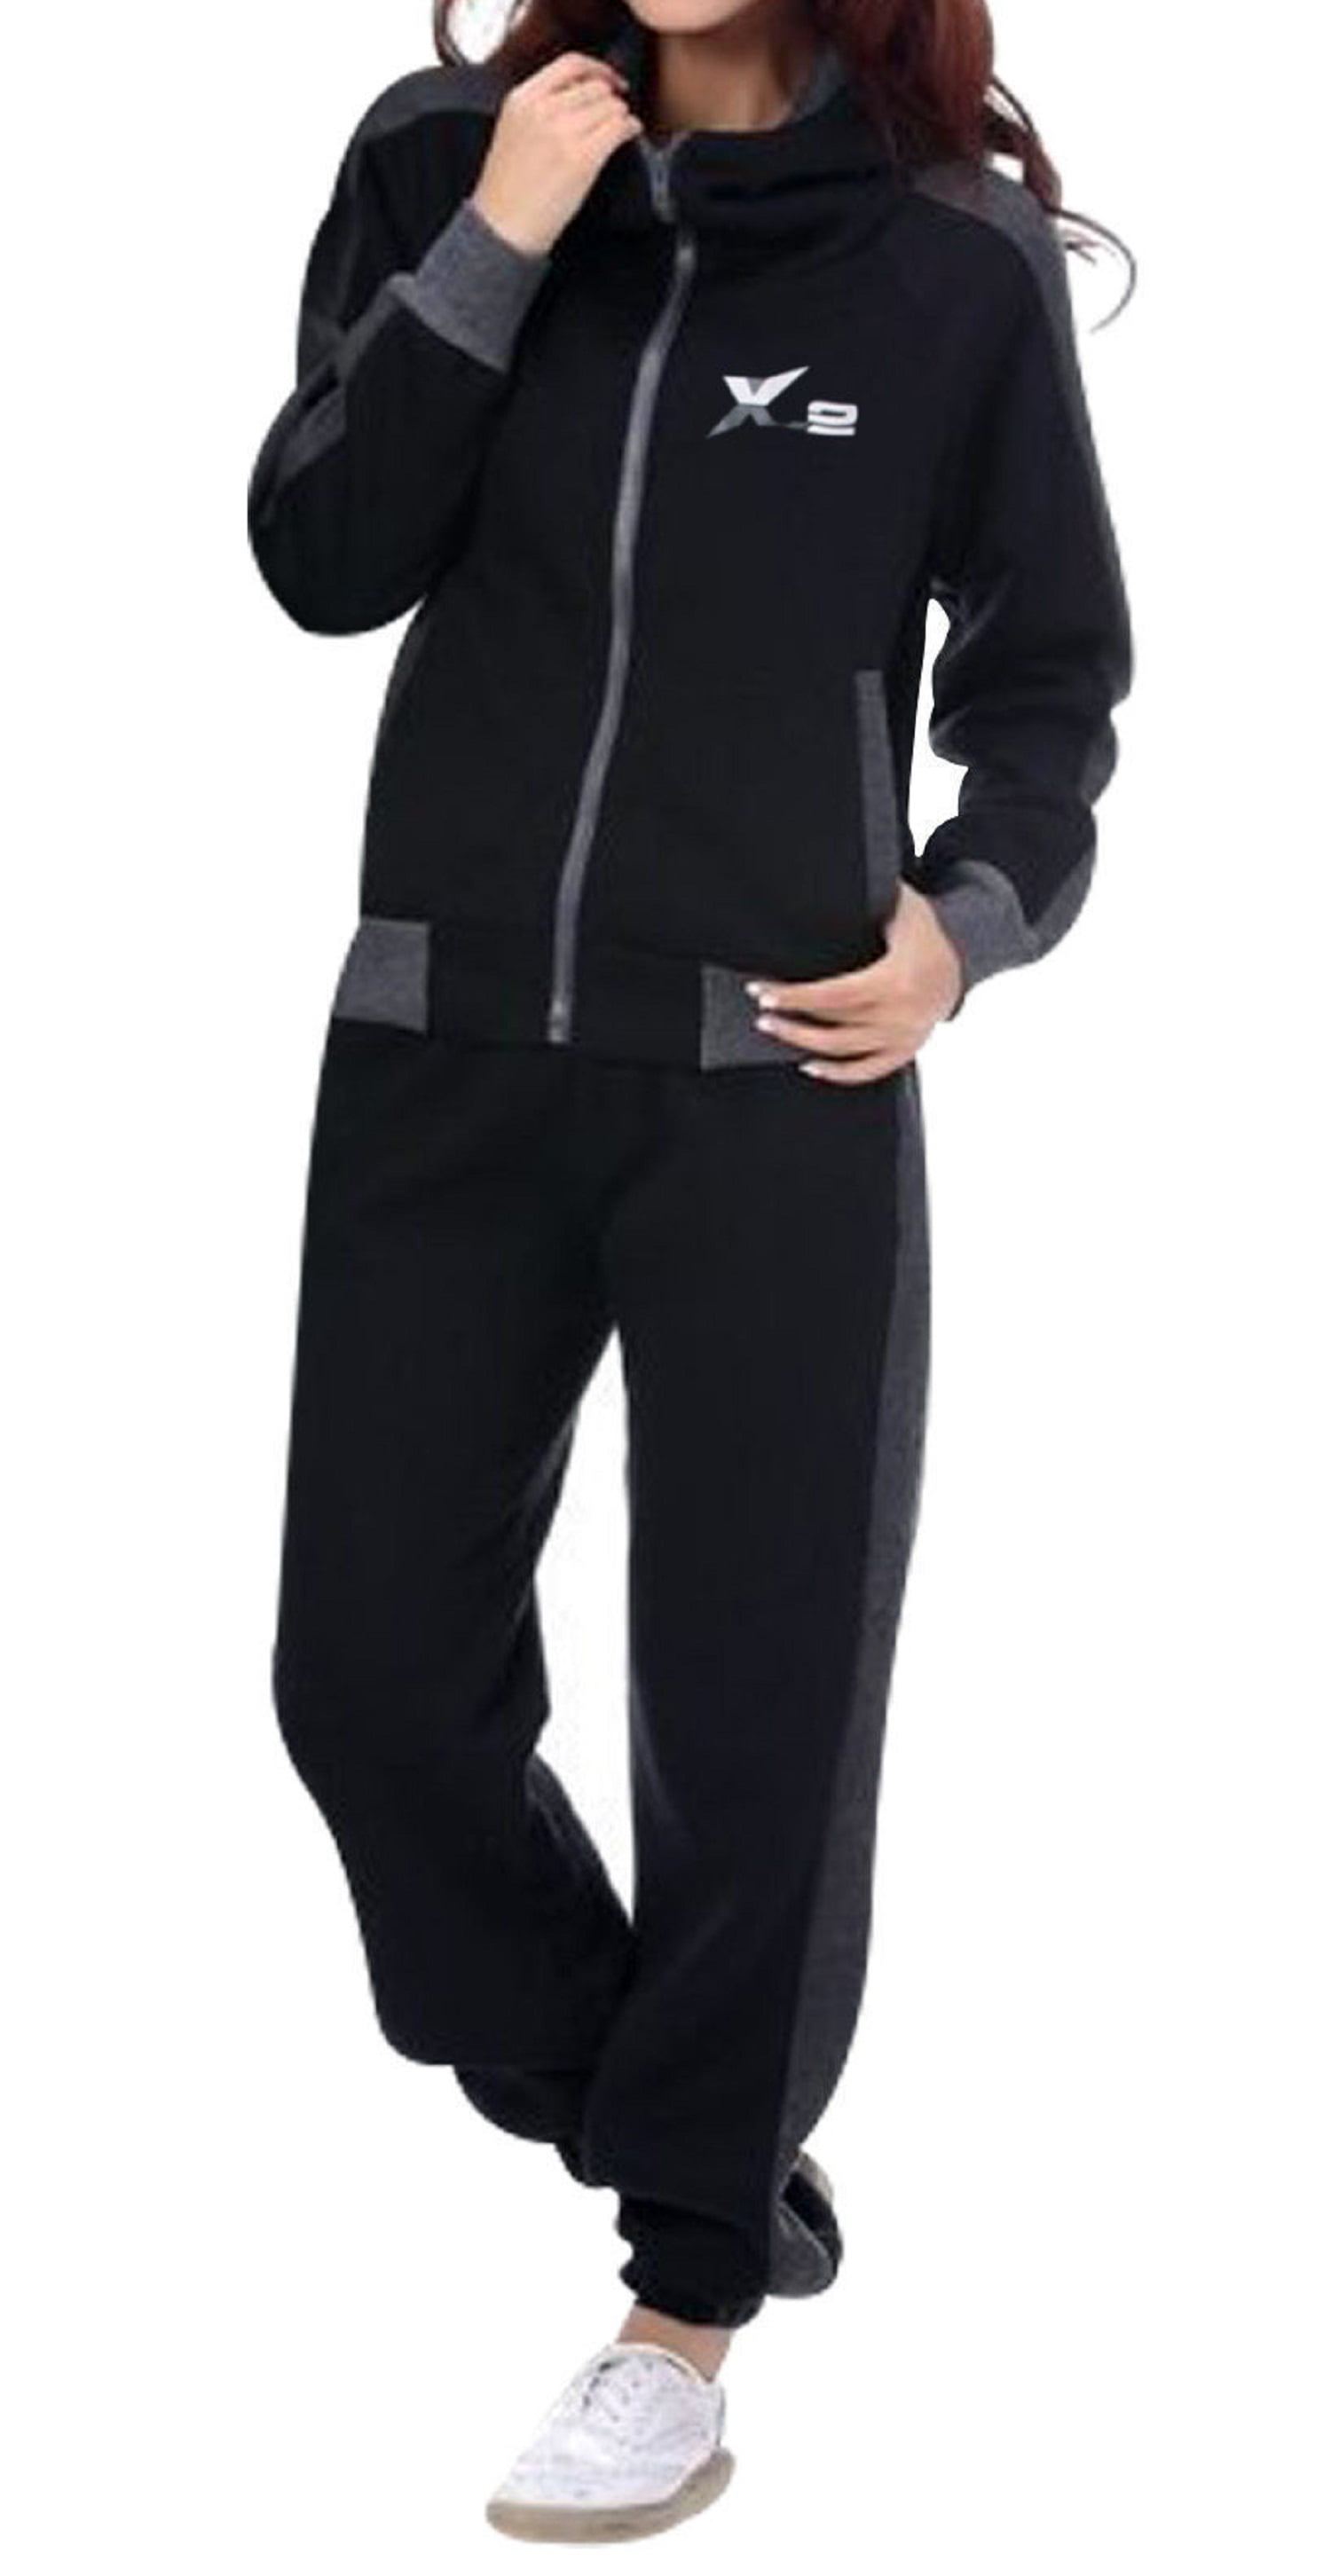 X-2 Womens Athletic Full Zip Fleece Tracksuit Jogging Gym Sweatsuit Hooded Top 